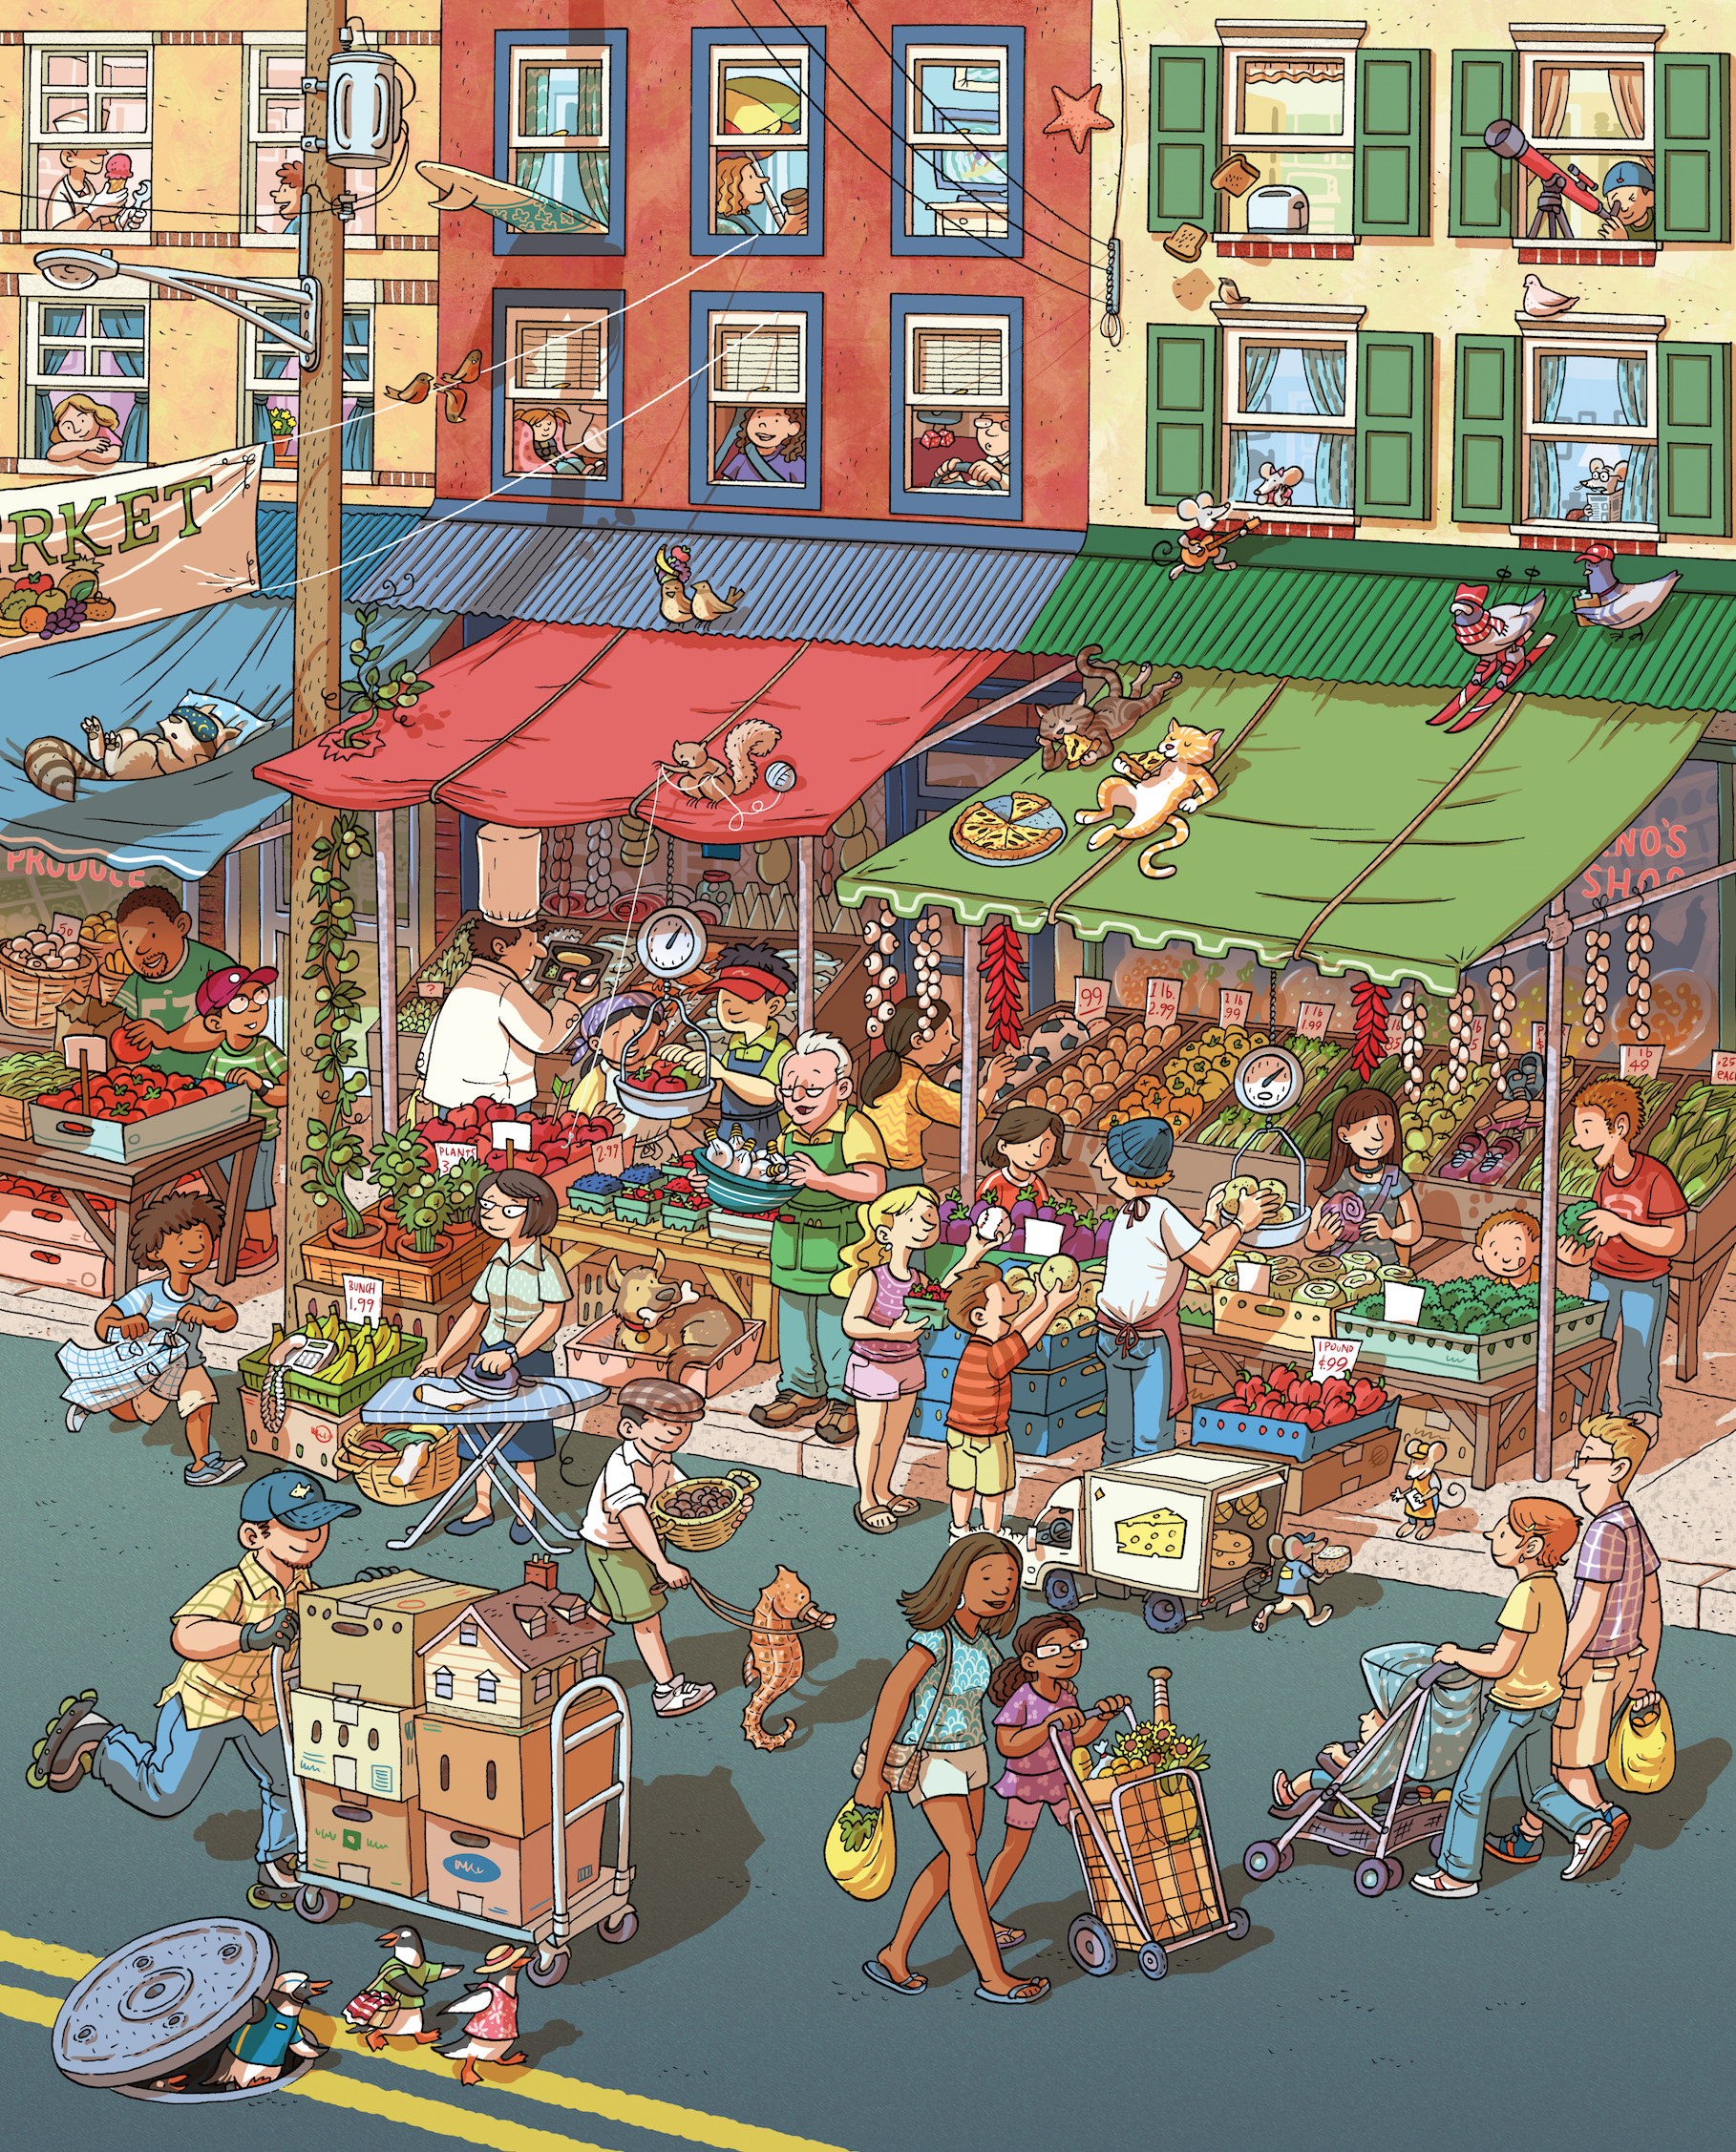 There s a lot of people. Рынок иллюстрация. Мультяшный город и рынок. Рынок рисунок. Базар иллюстрация.